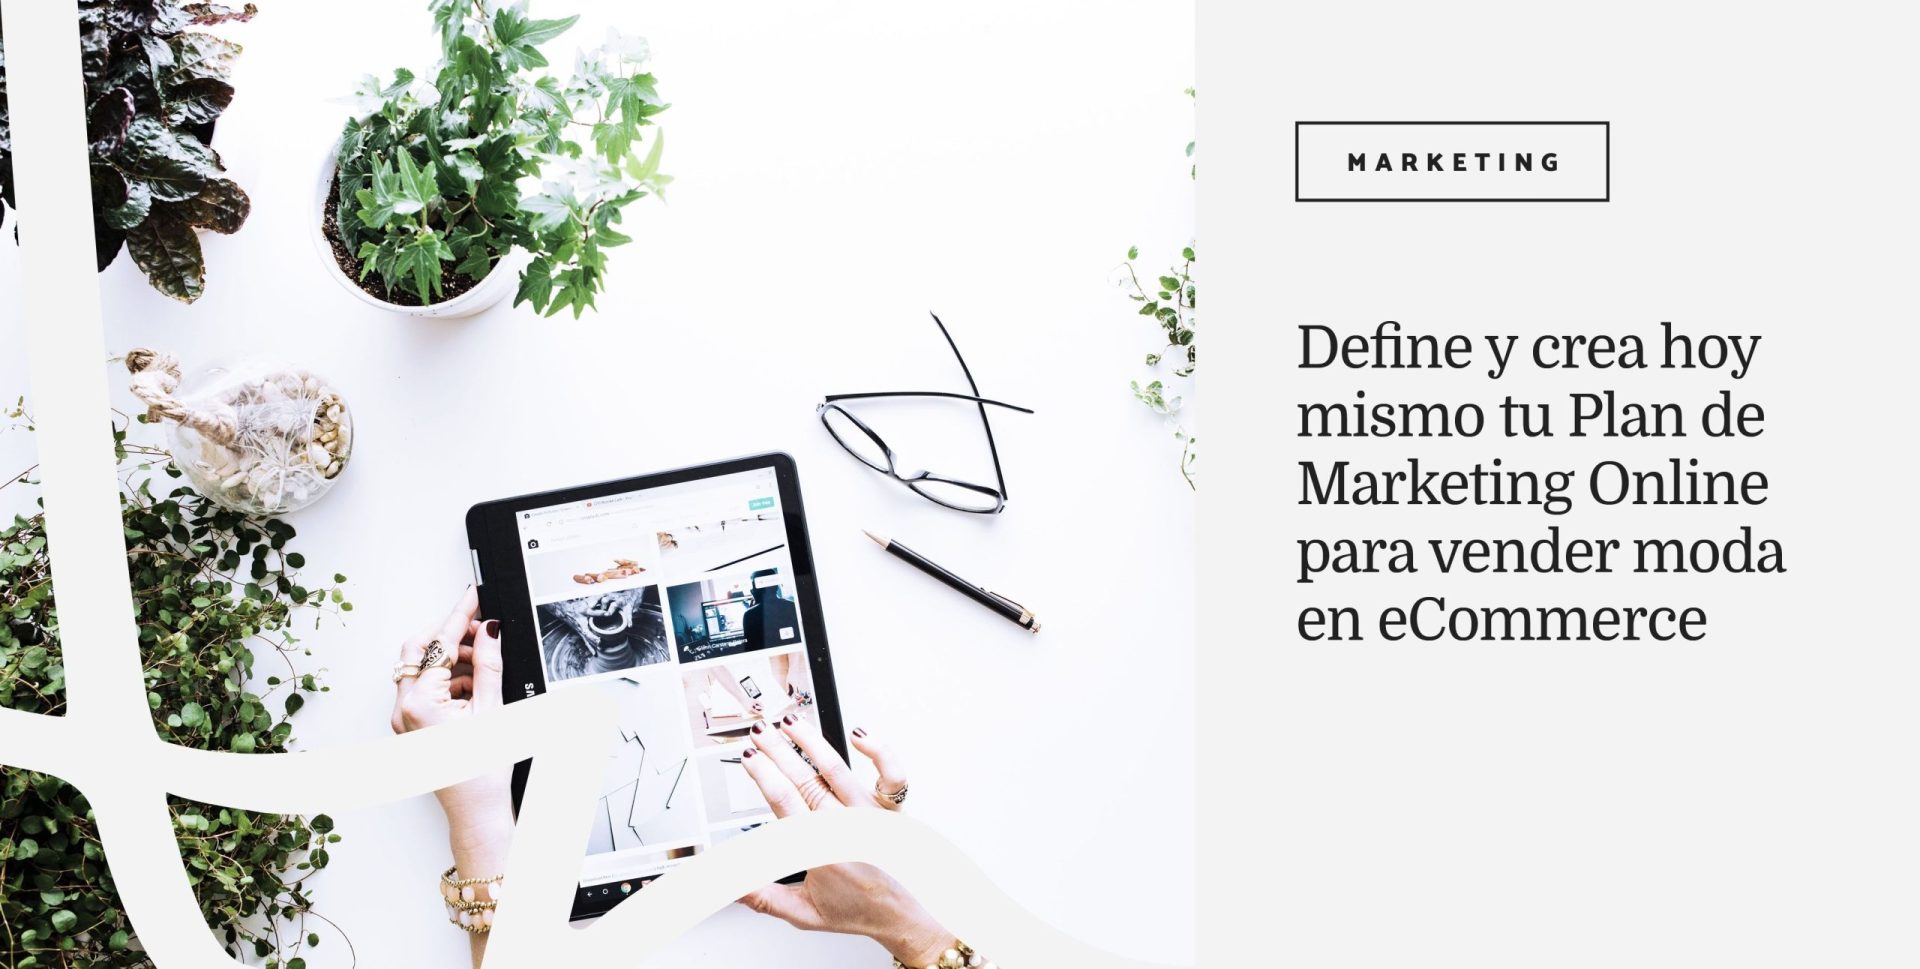 Plan-de-Marketing-2019-para-marcas-de-moda-Ana-Diaz-del-Rio-Portada.jpg